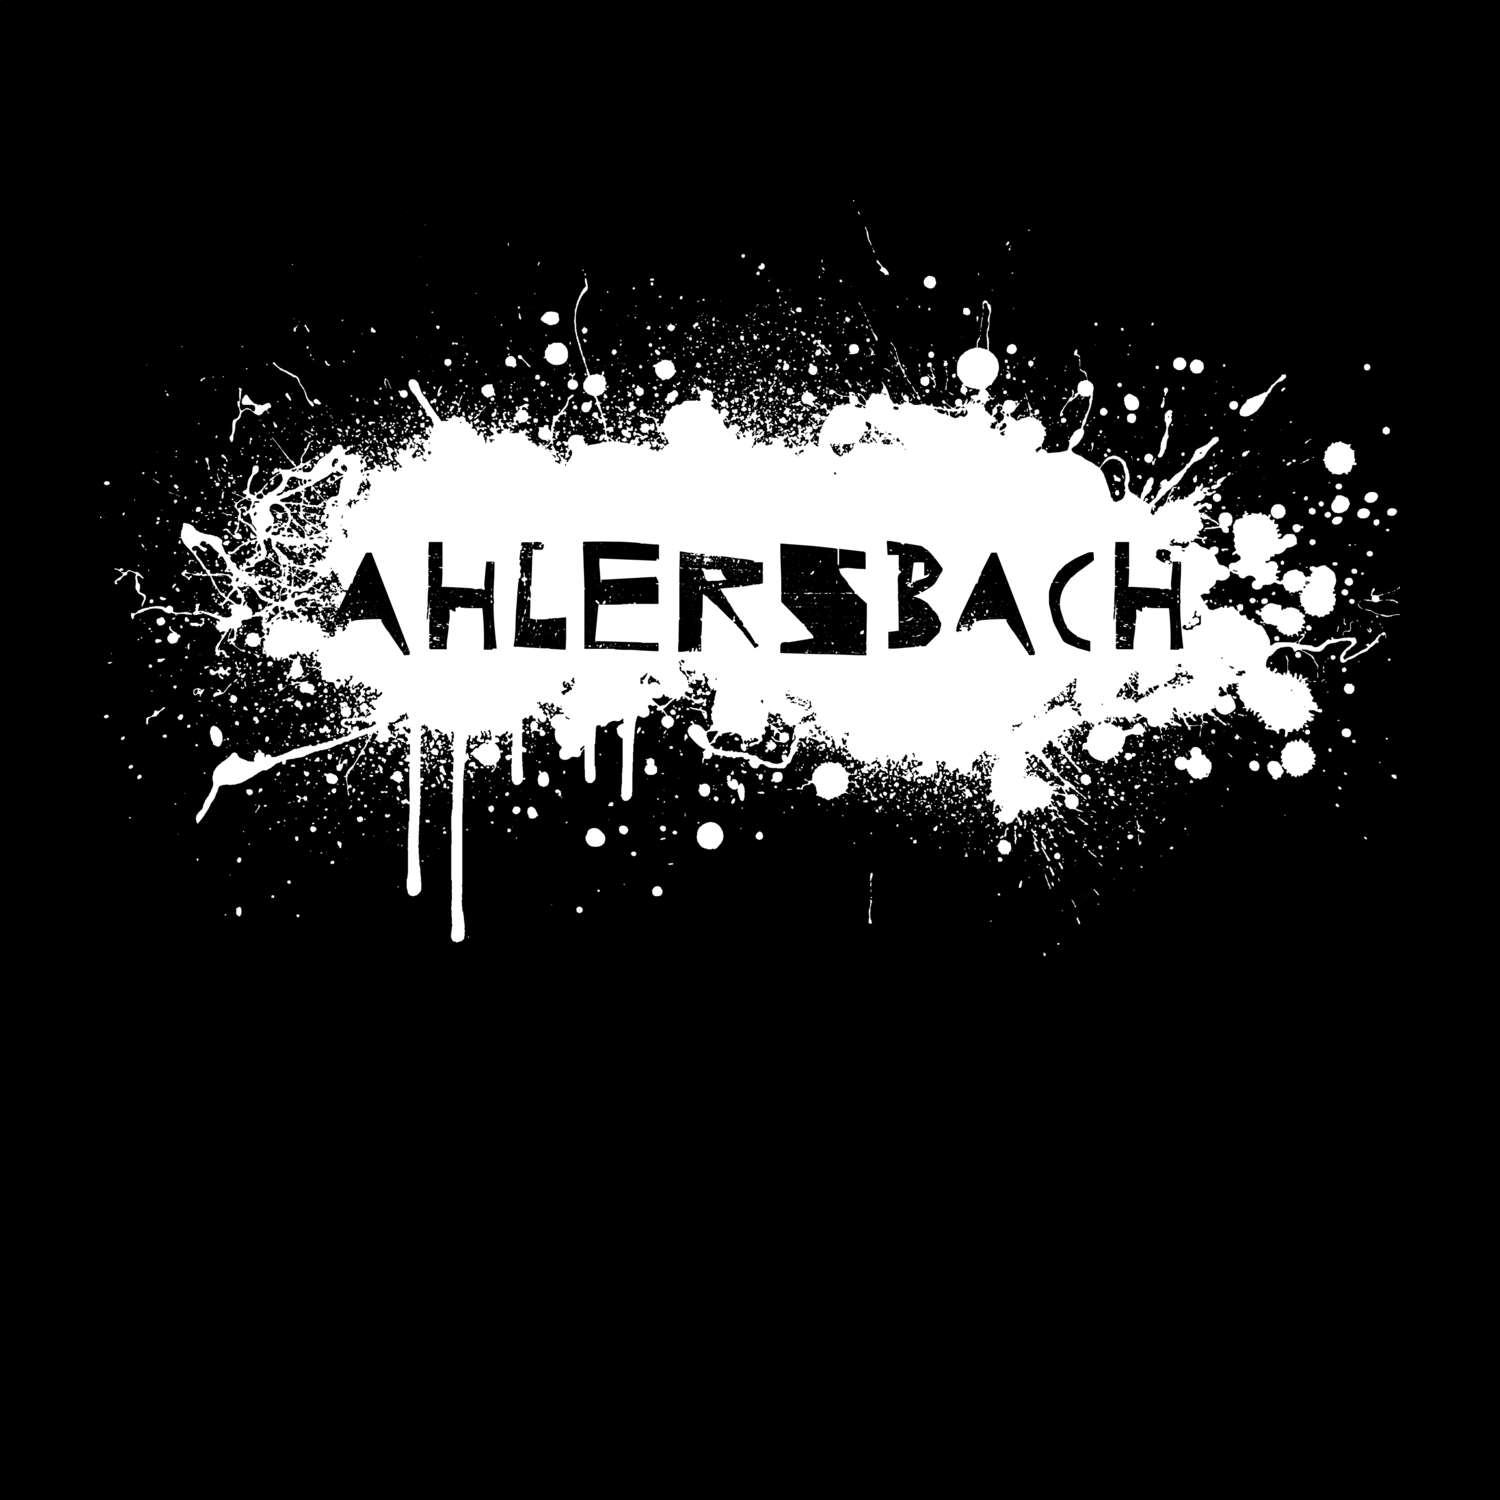 Ahlersbach T-Shirt »Paint Splash Punk«